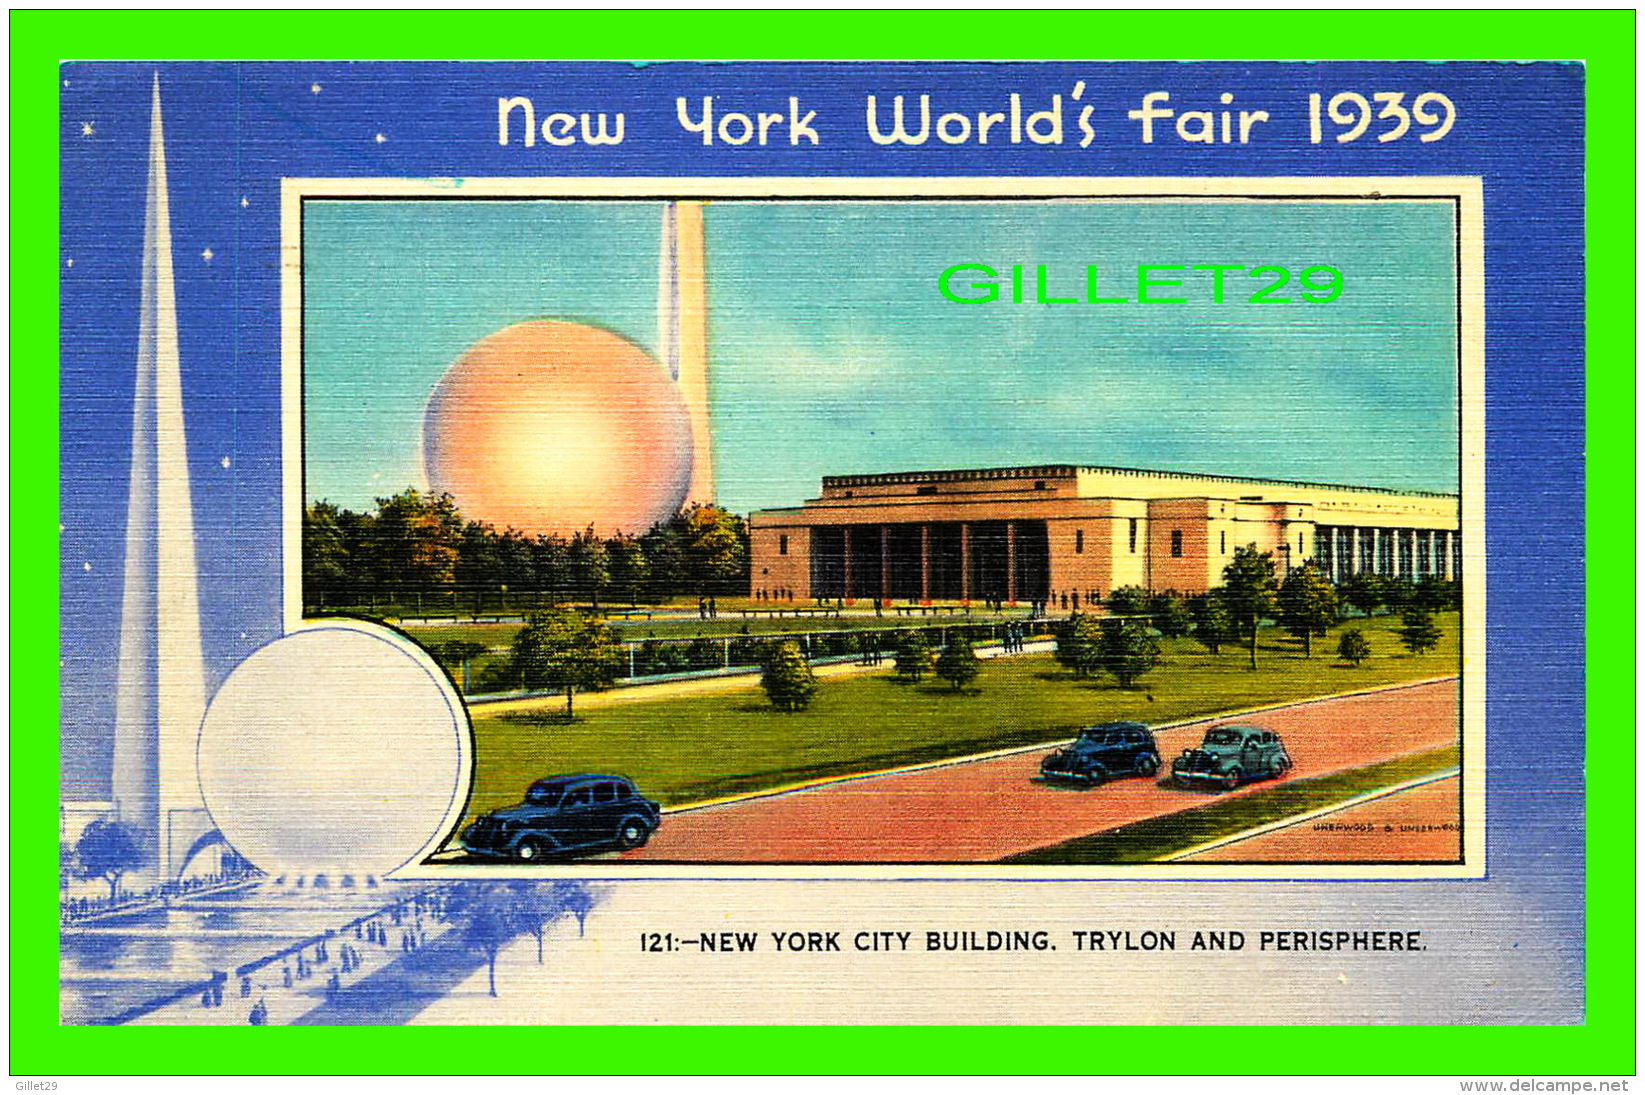 NEW YORK CITY, NY - NEW YORK WORLD'S FAIR 1939 - NYC BUILDING, TRYLON &amp; PERISPHERE - TRAVEL IN 1939 - - Expositions